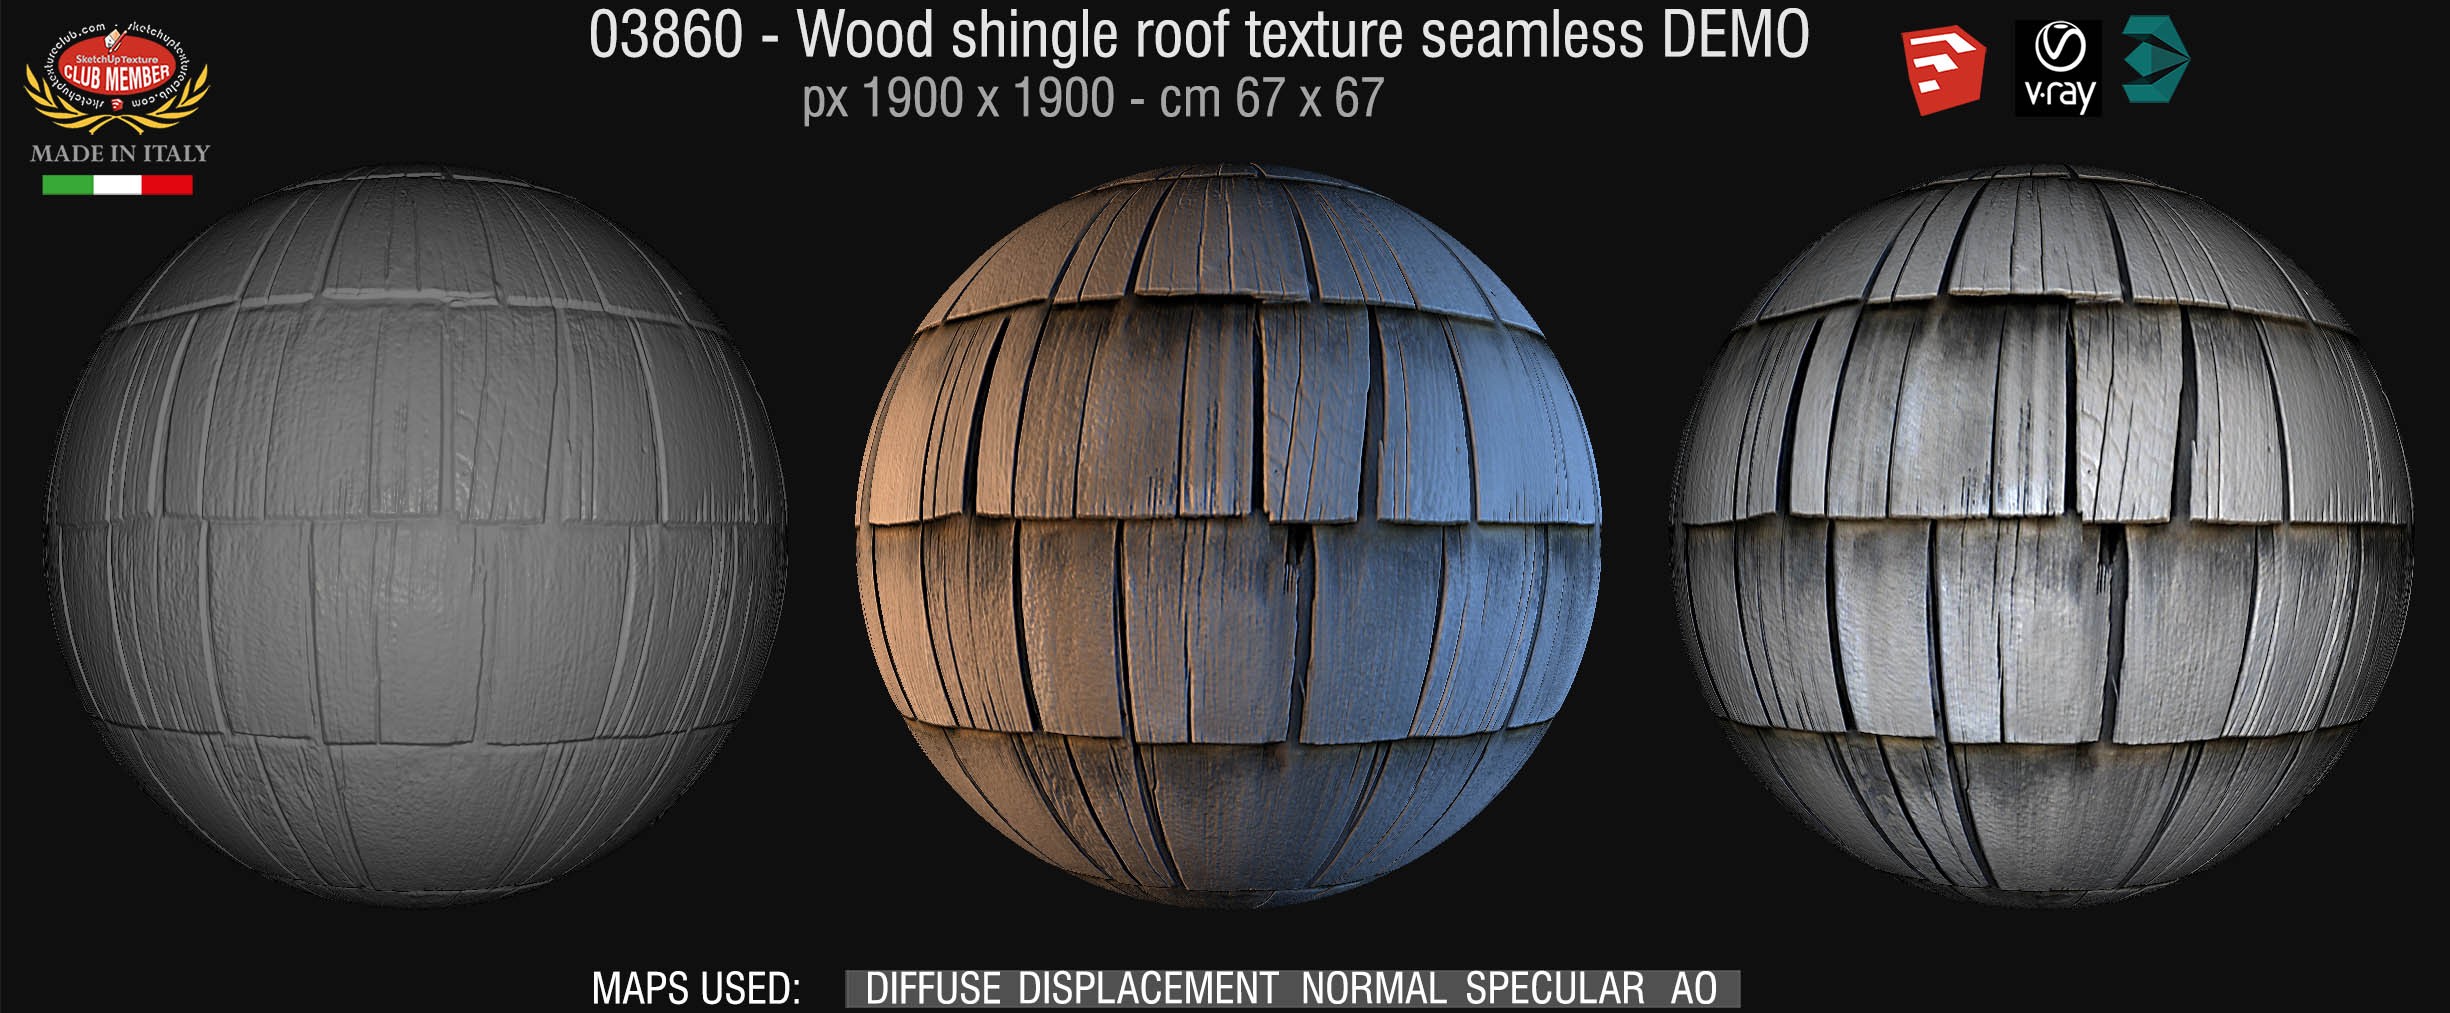 03860 Wood shingle roof texture seamless + maps DEMO